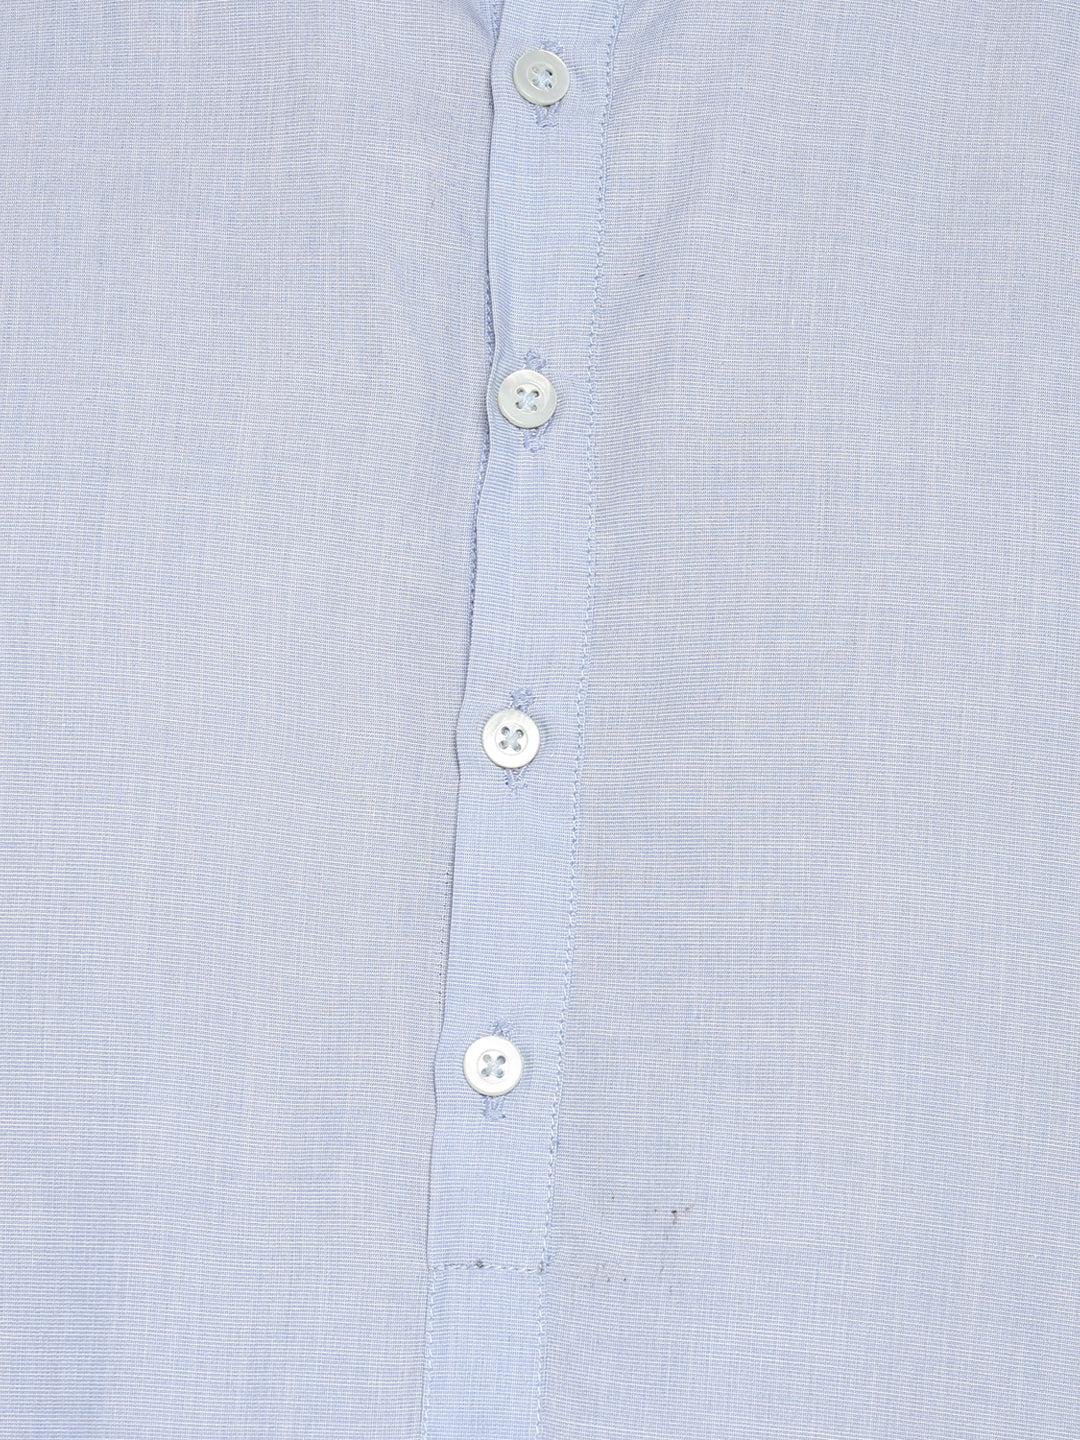 100% Cotton Sky Blue Plain Slim Fit Full Sleeve Formal Shirt